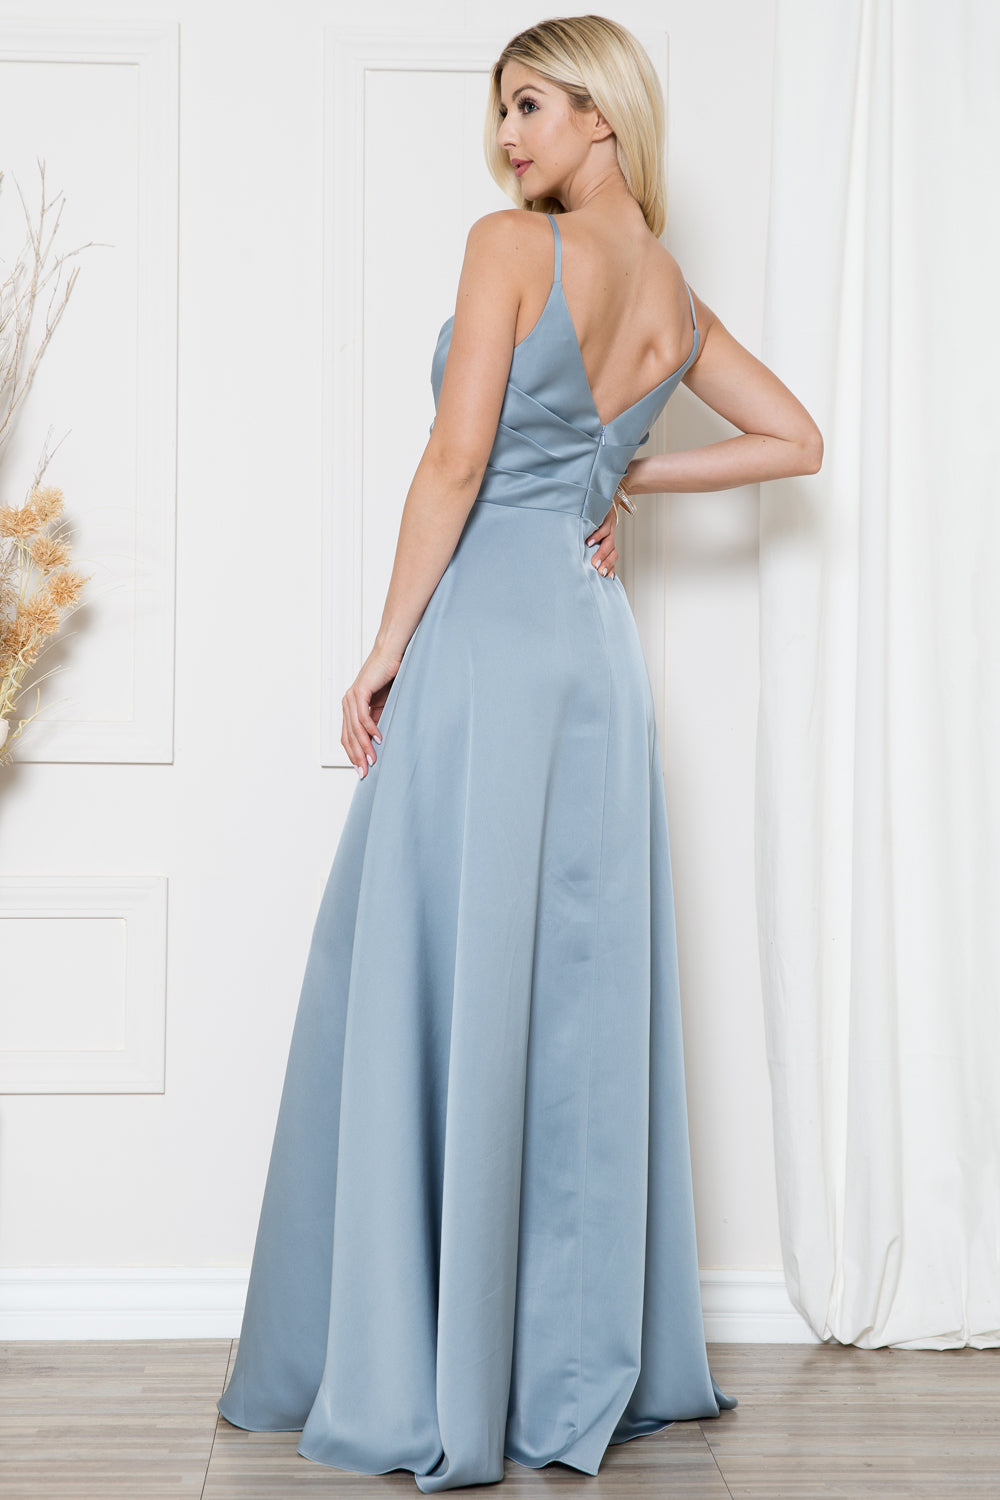 Open V-Back Spaghetti Straps High Slit Saton Long Prom Dress ACBZ012-Prom Dress-smcfashion.com